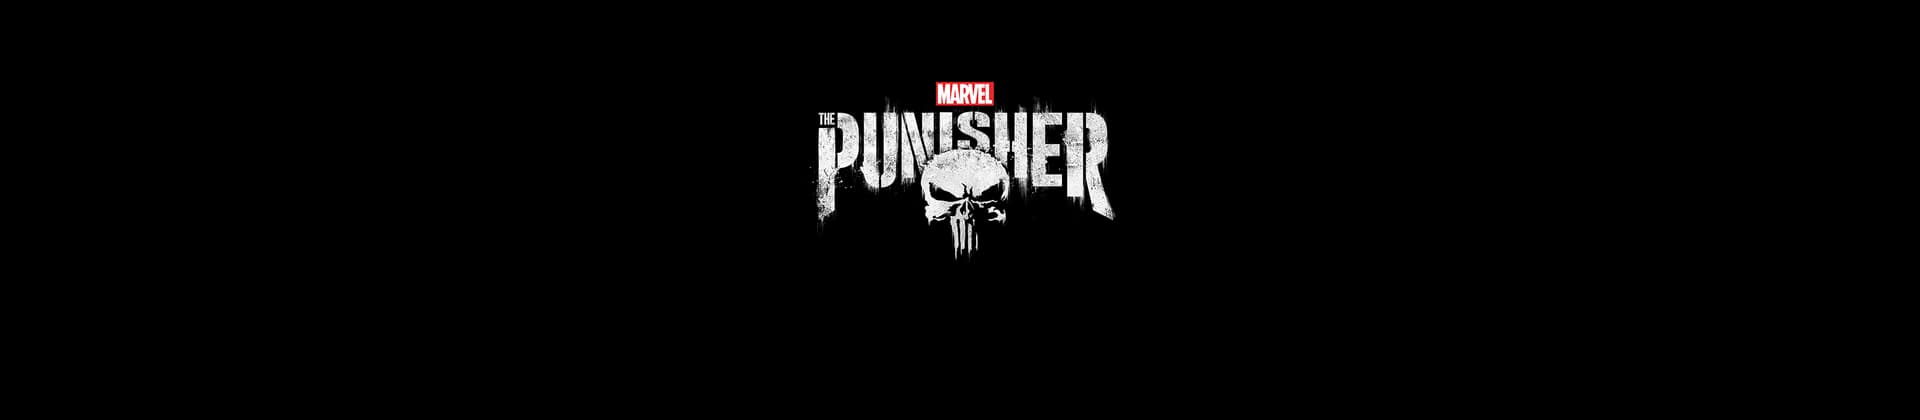 Marvel's The Punisher Season 3 TV Show Logo On Black